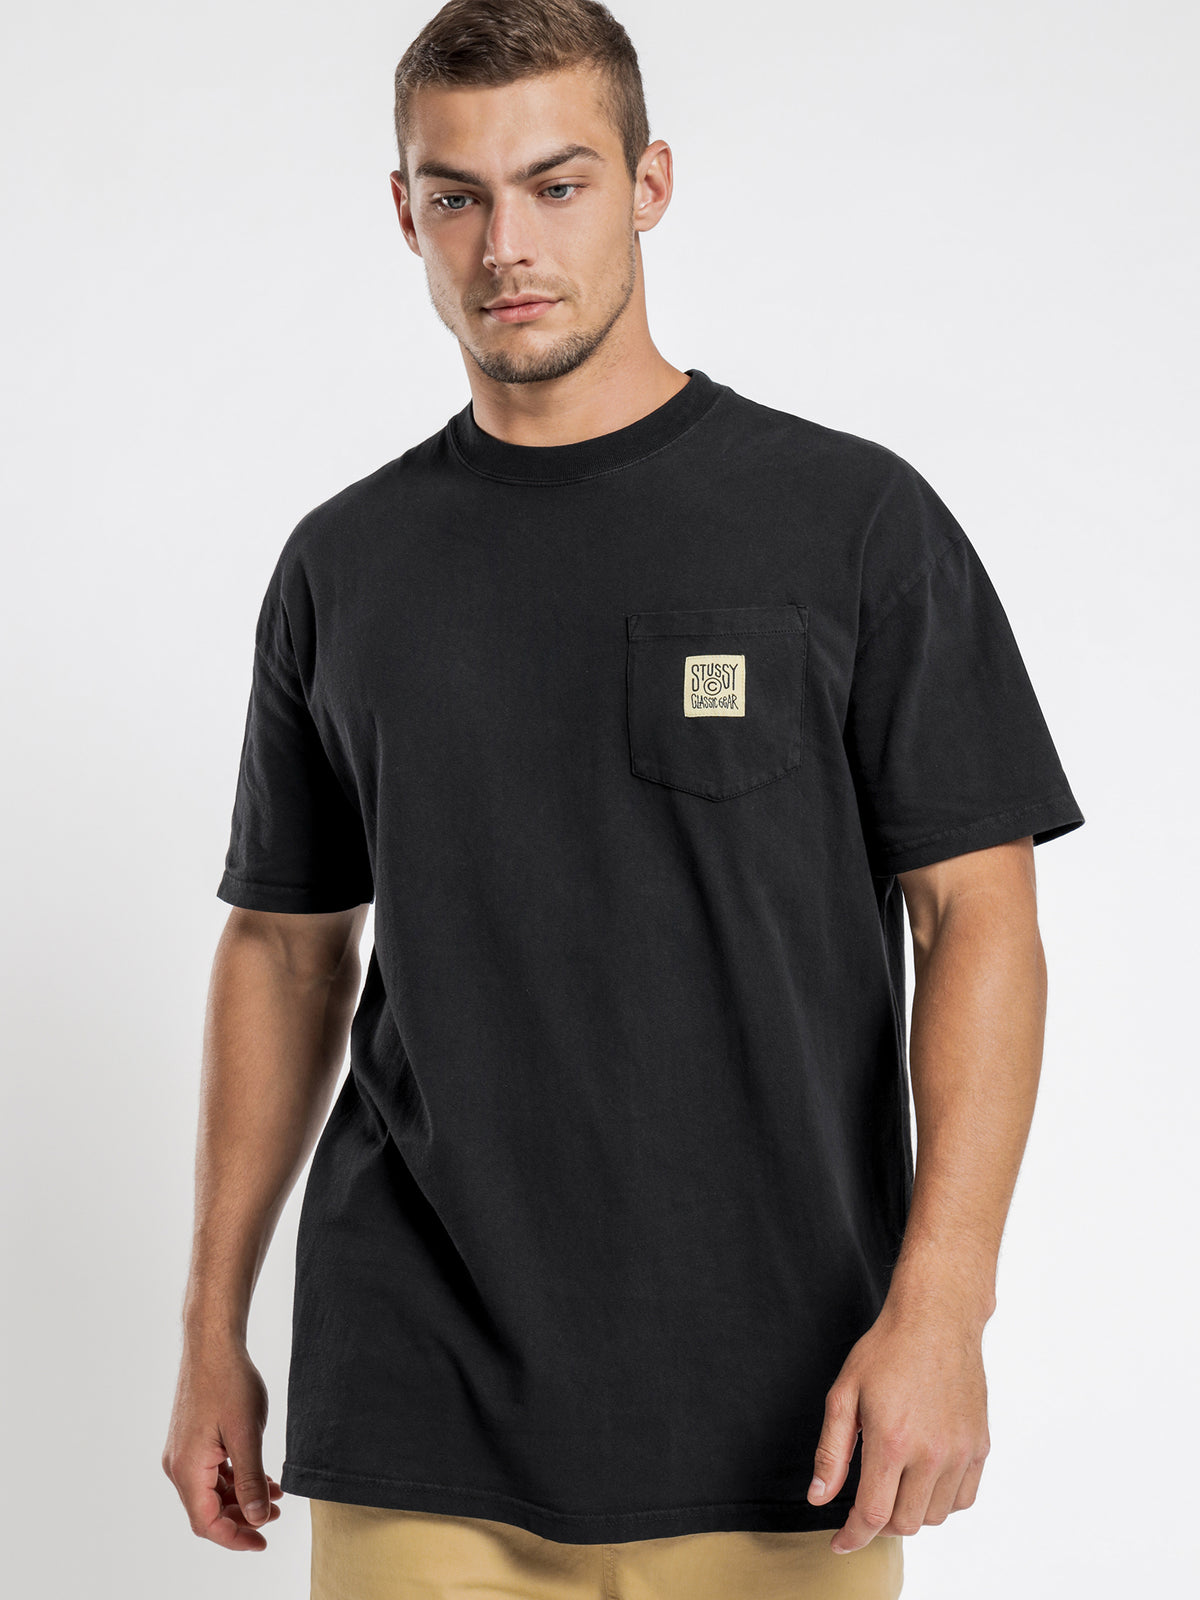 Classic Gear Pocket T-Shirt in Black